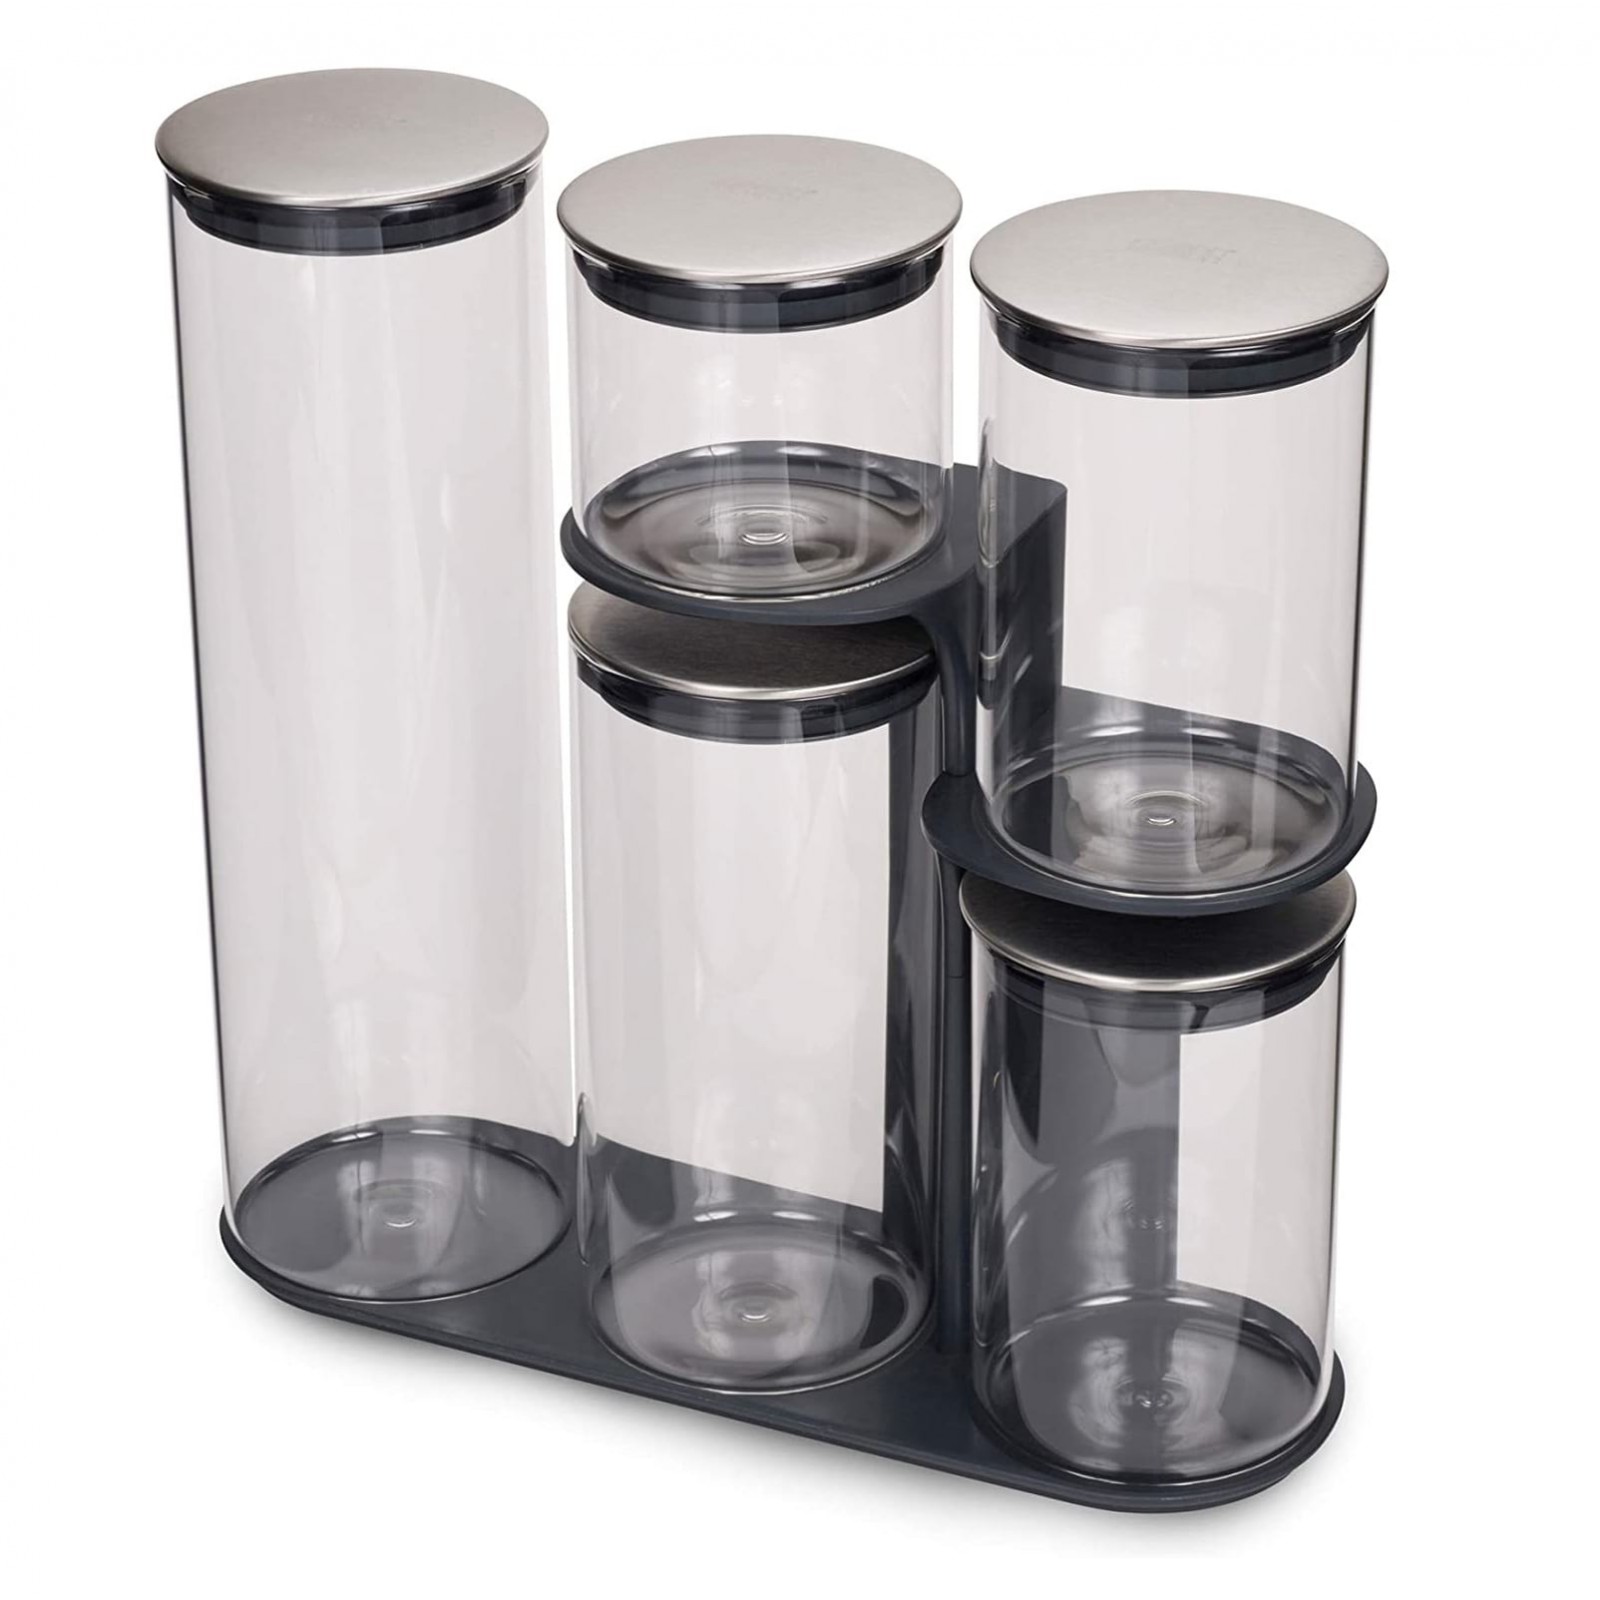 Joseph Joseph Podium Steel 5-Piece Glass Food Storage Containers